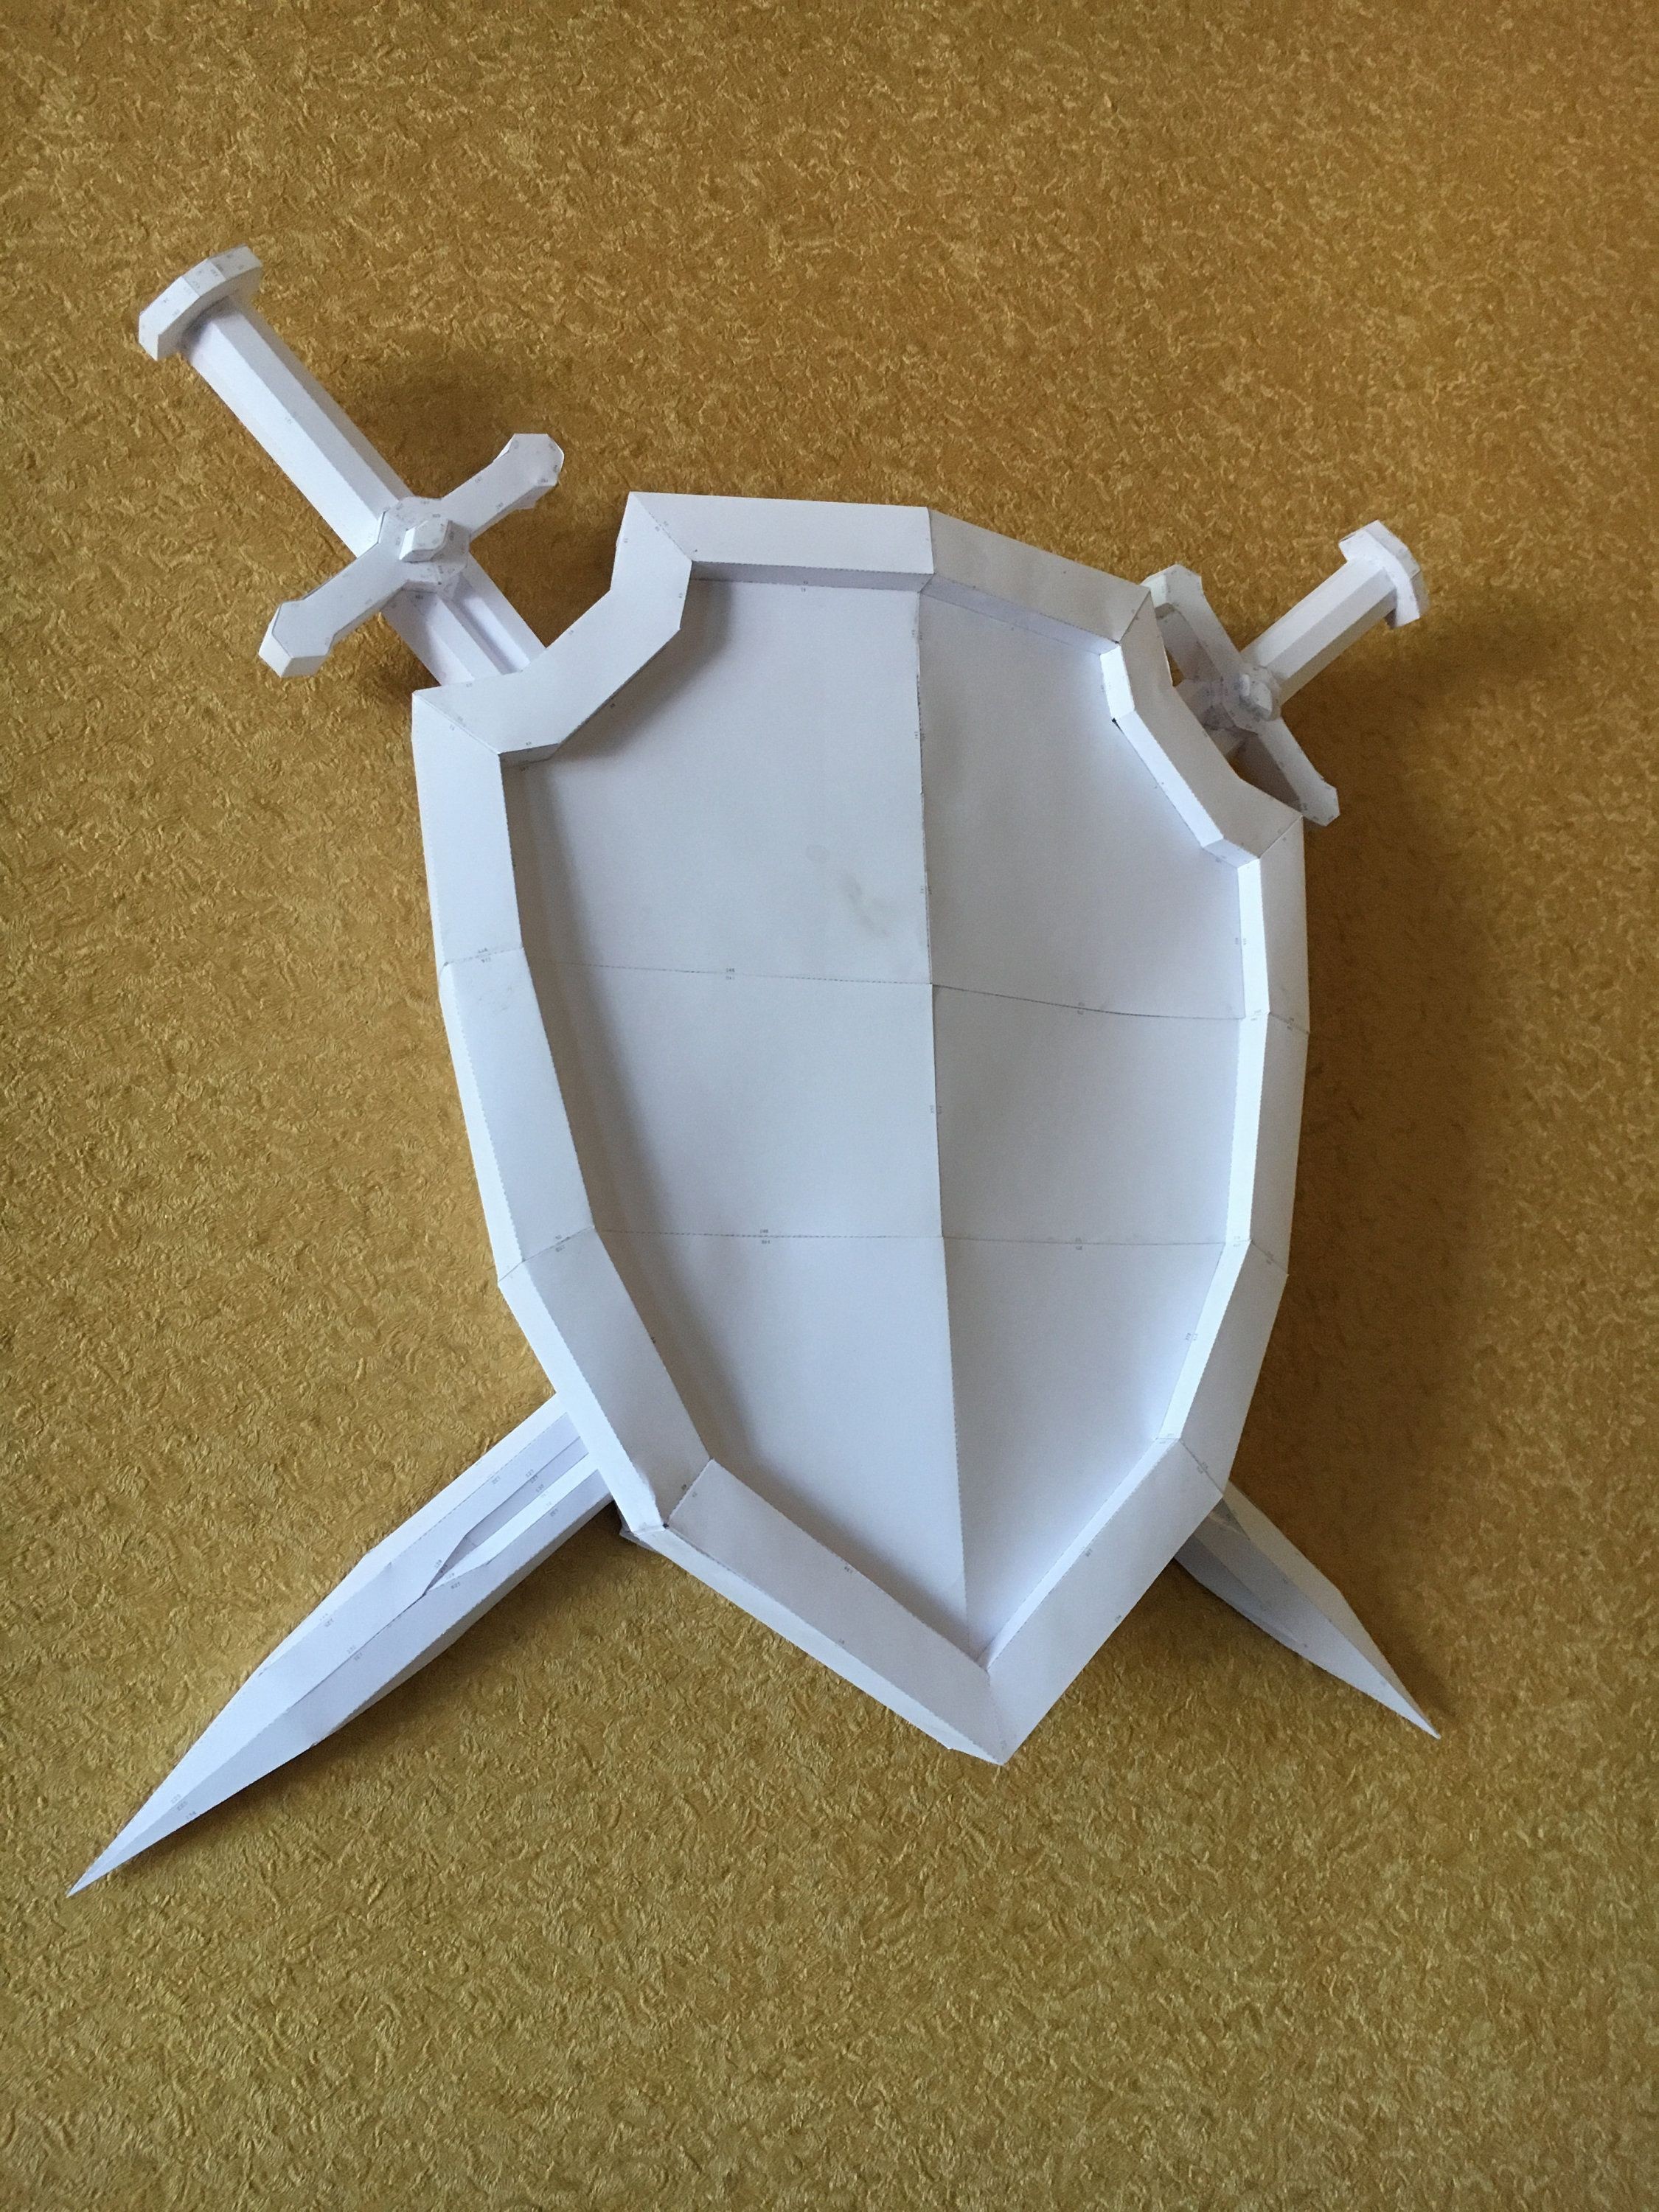 Papercraft Bear Sword Shield Diy Papercraft Model ÐÑÐ¼Ð°Ð¶Ð½ÑÐµ Ð¸Ð·Ð´ÐµÐ Ð¸Ñ